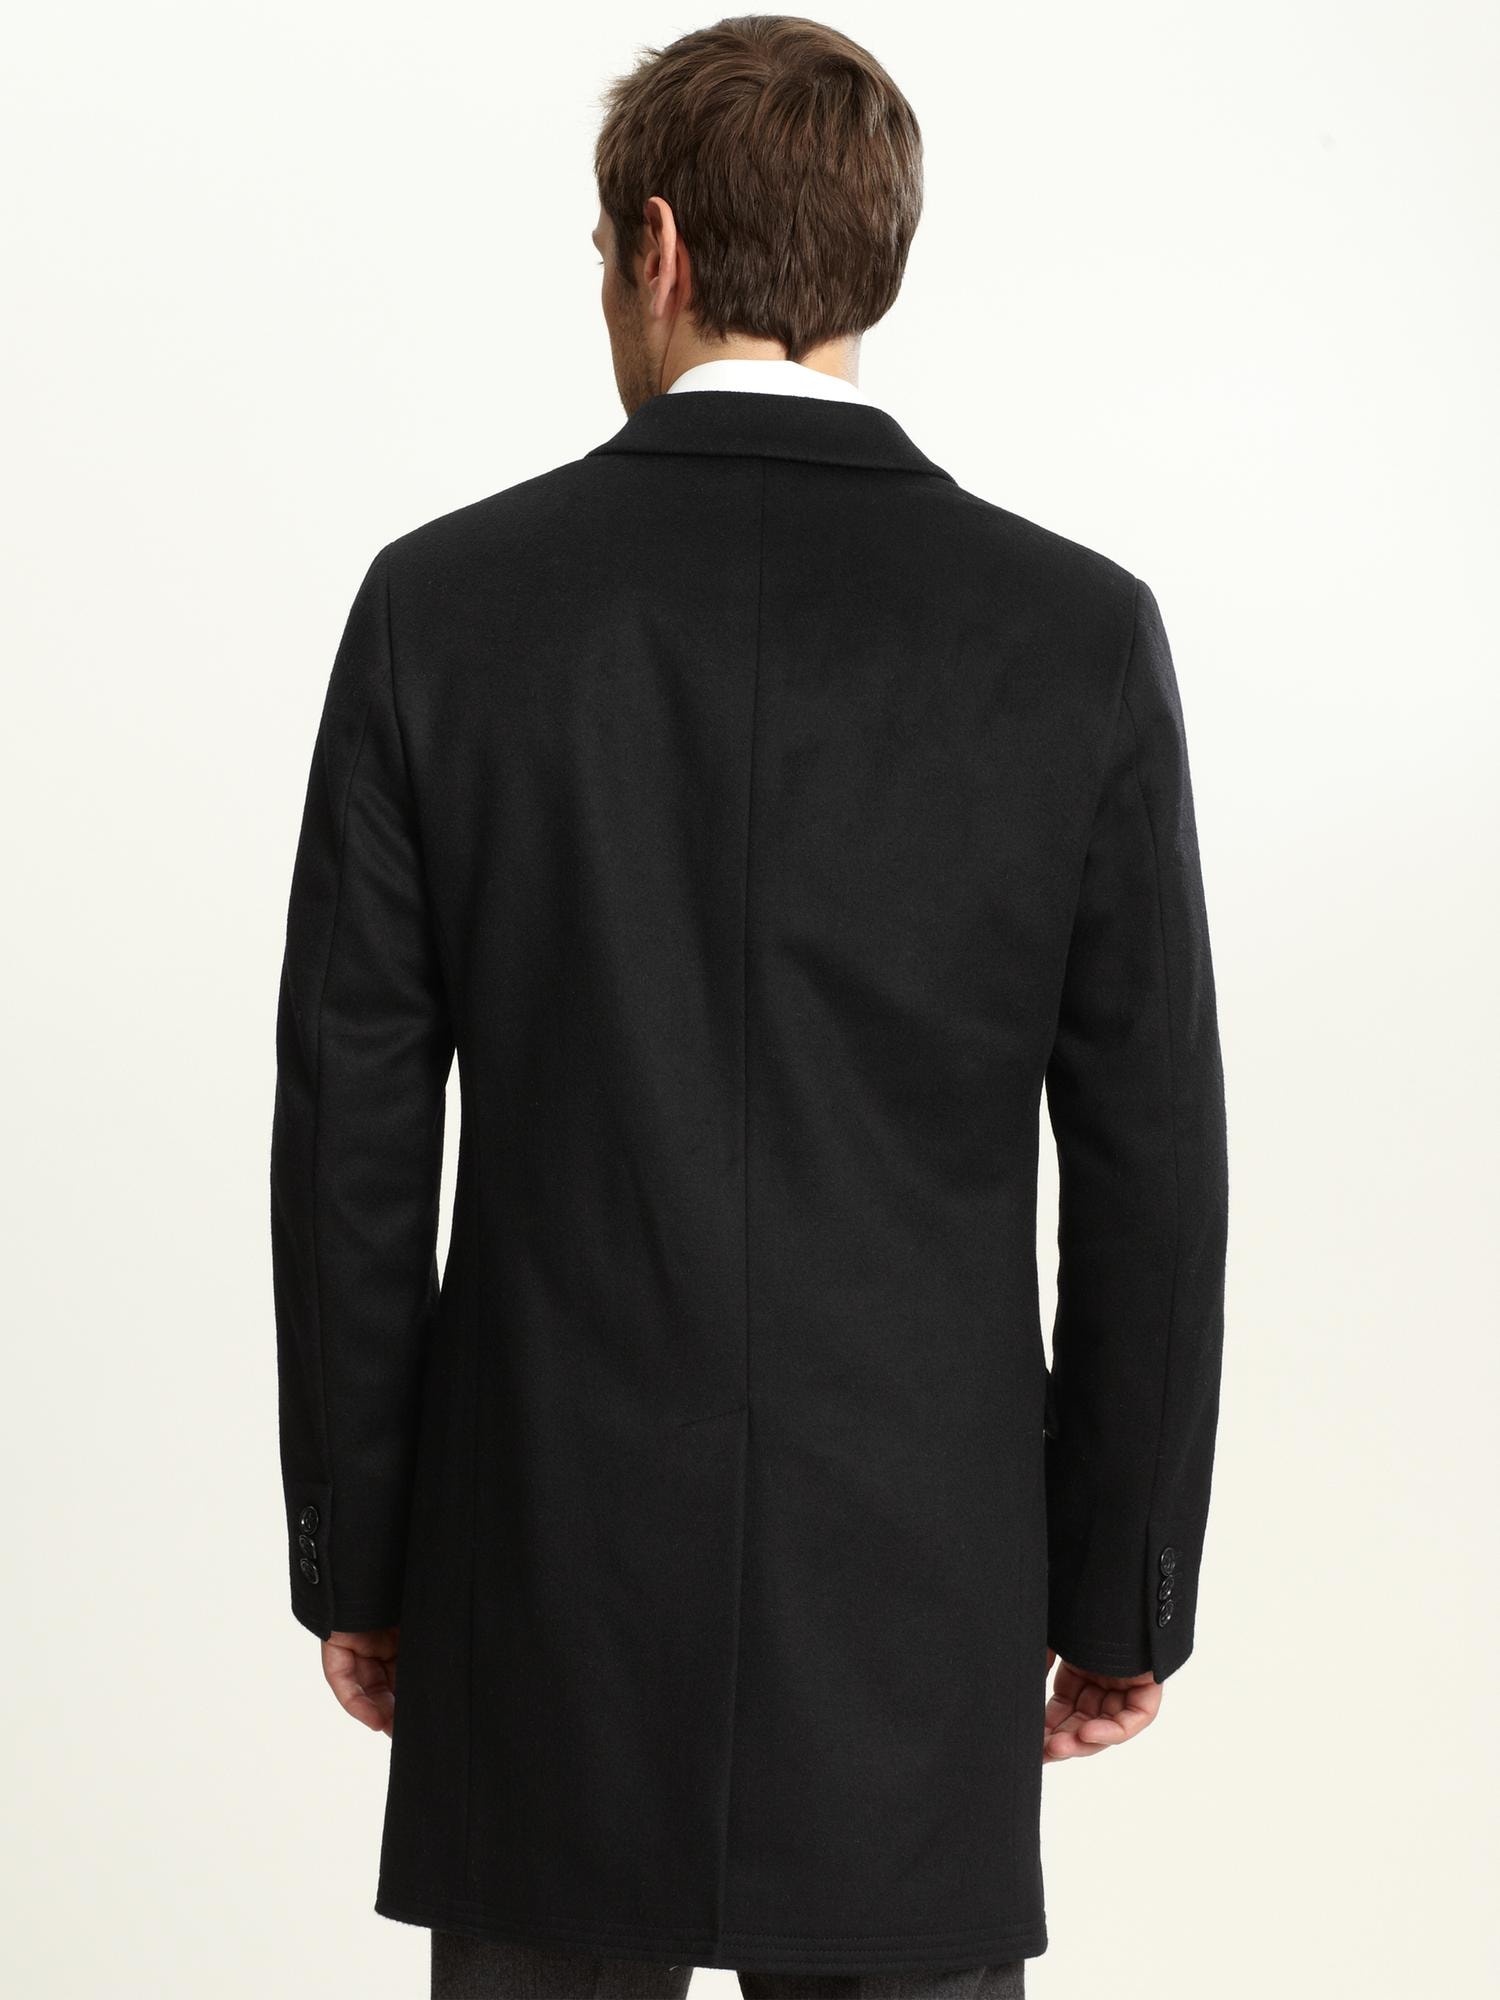 Black wool top coat